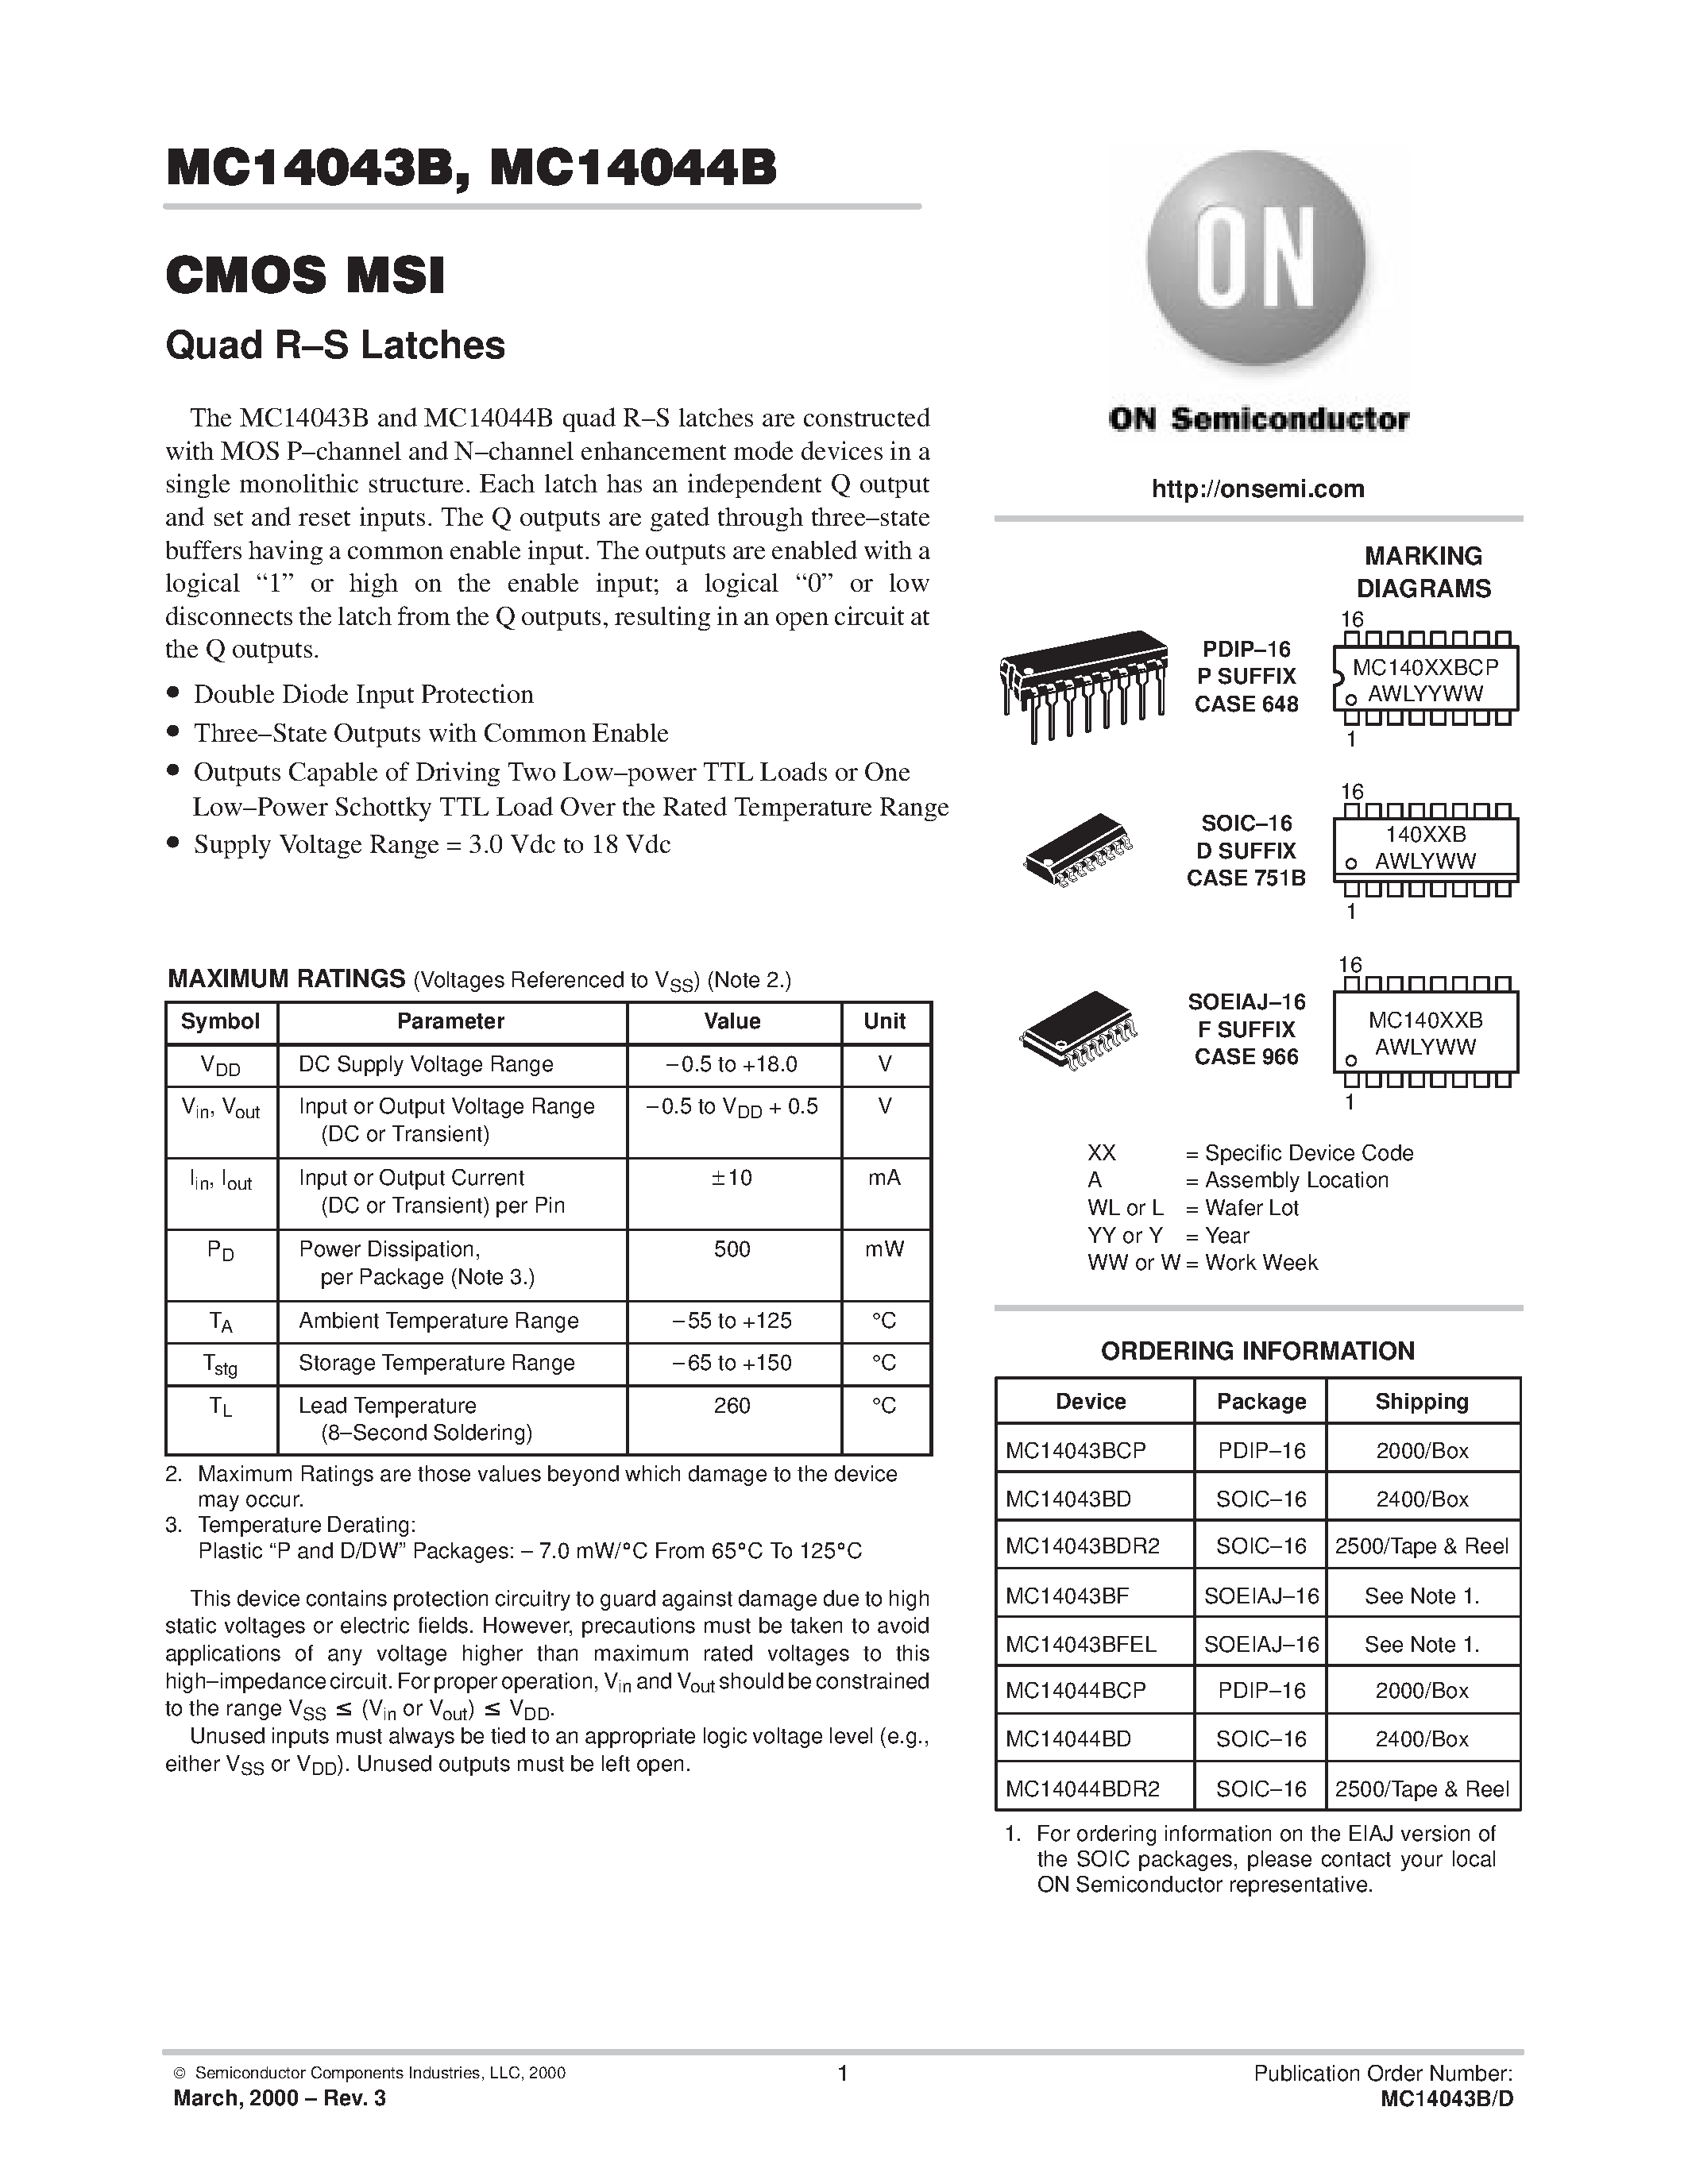 Datasheet MC14043BDR2 - CMOS MSI(Quad R-S Latches) page 1